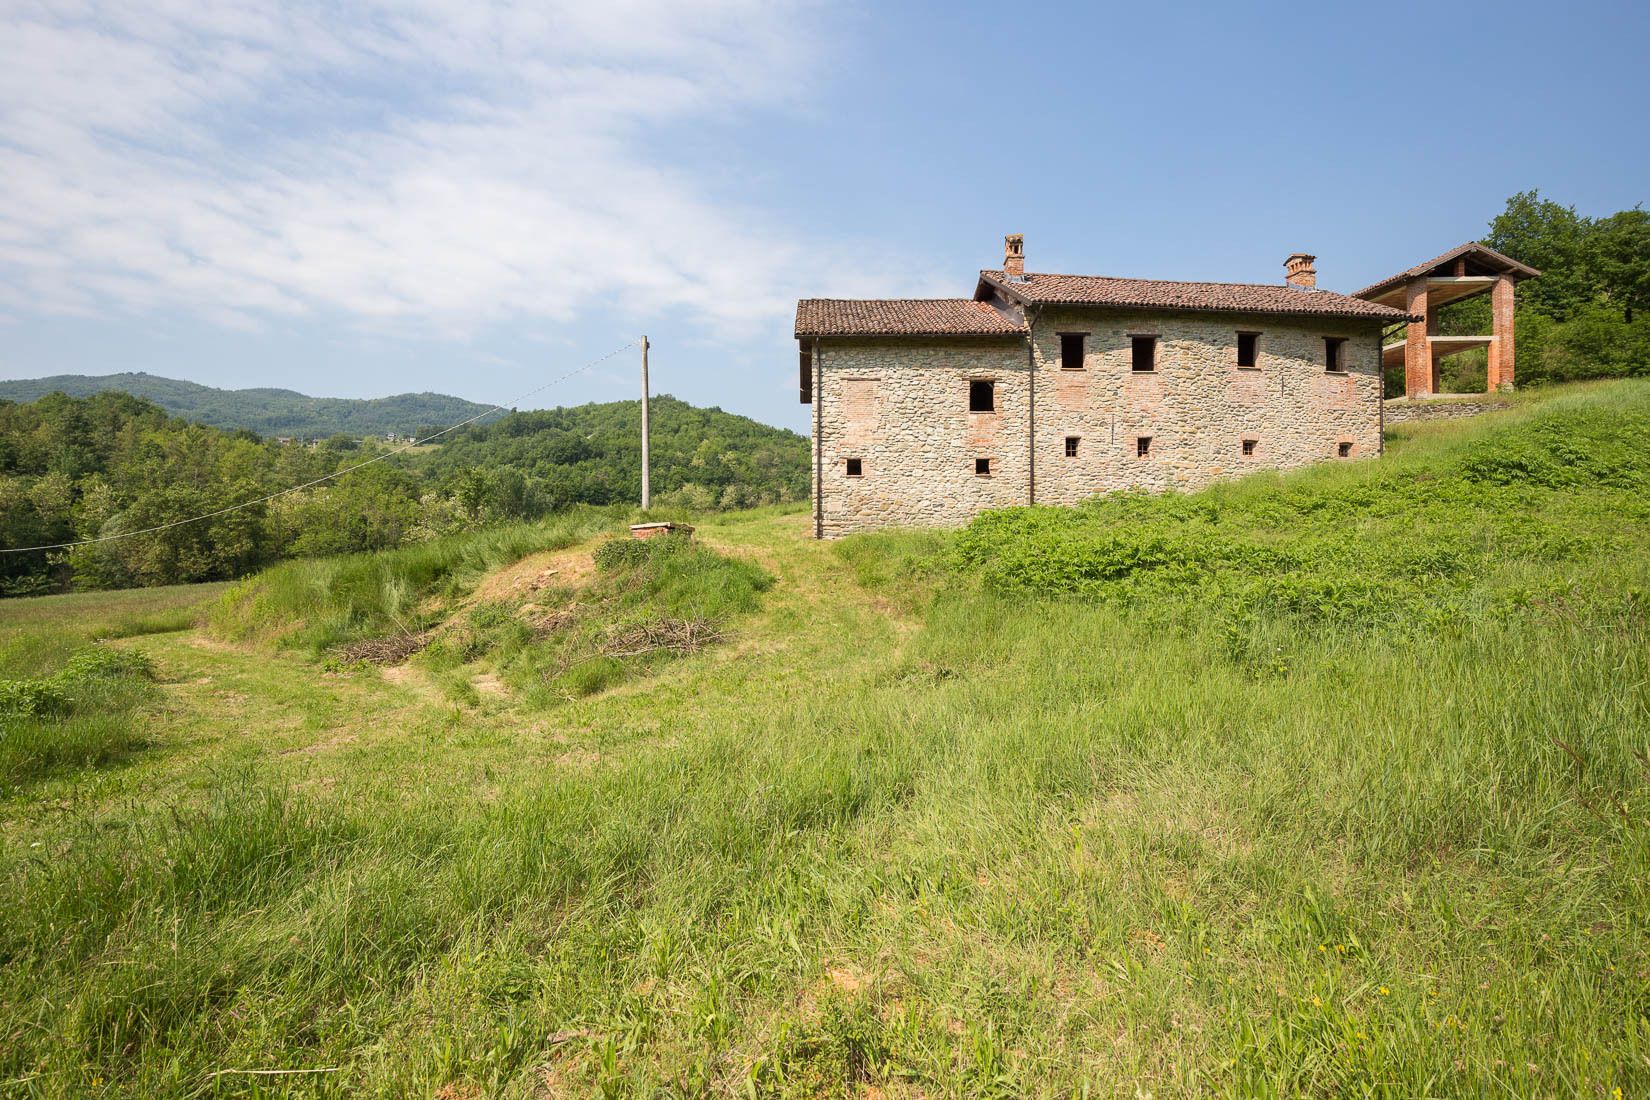 For sale cottage in quiet zone Morbello Piemonte